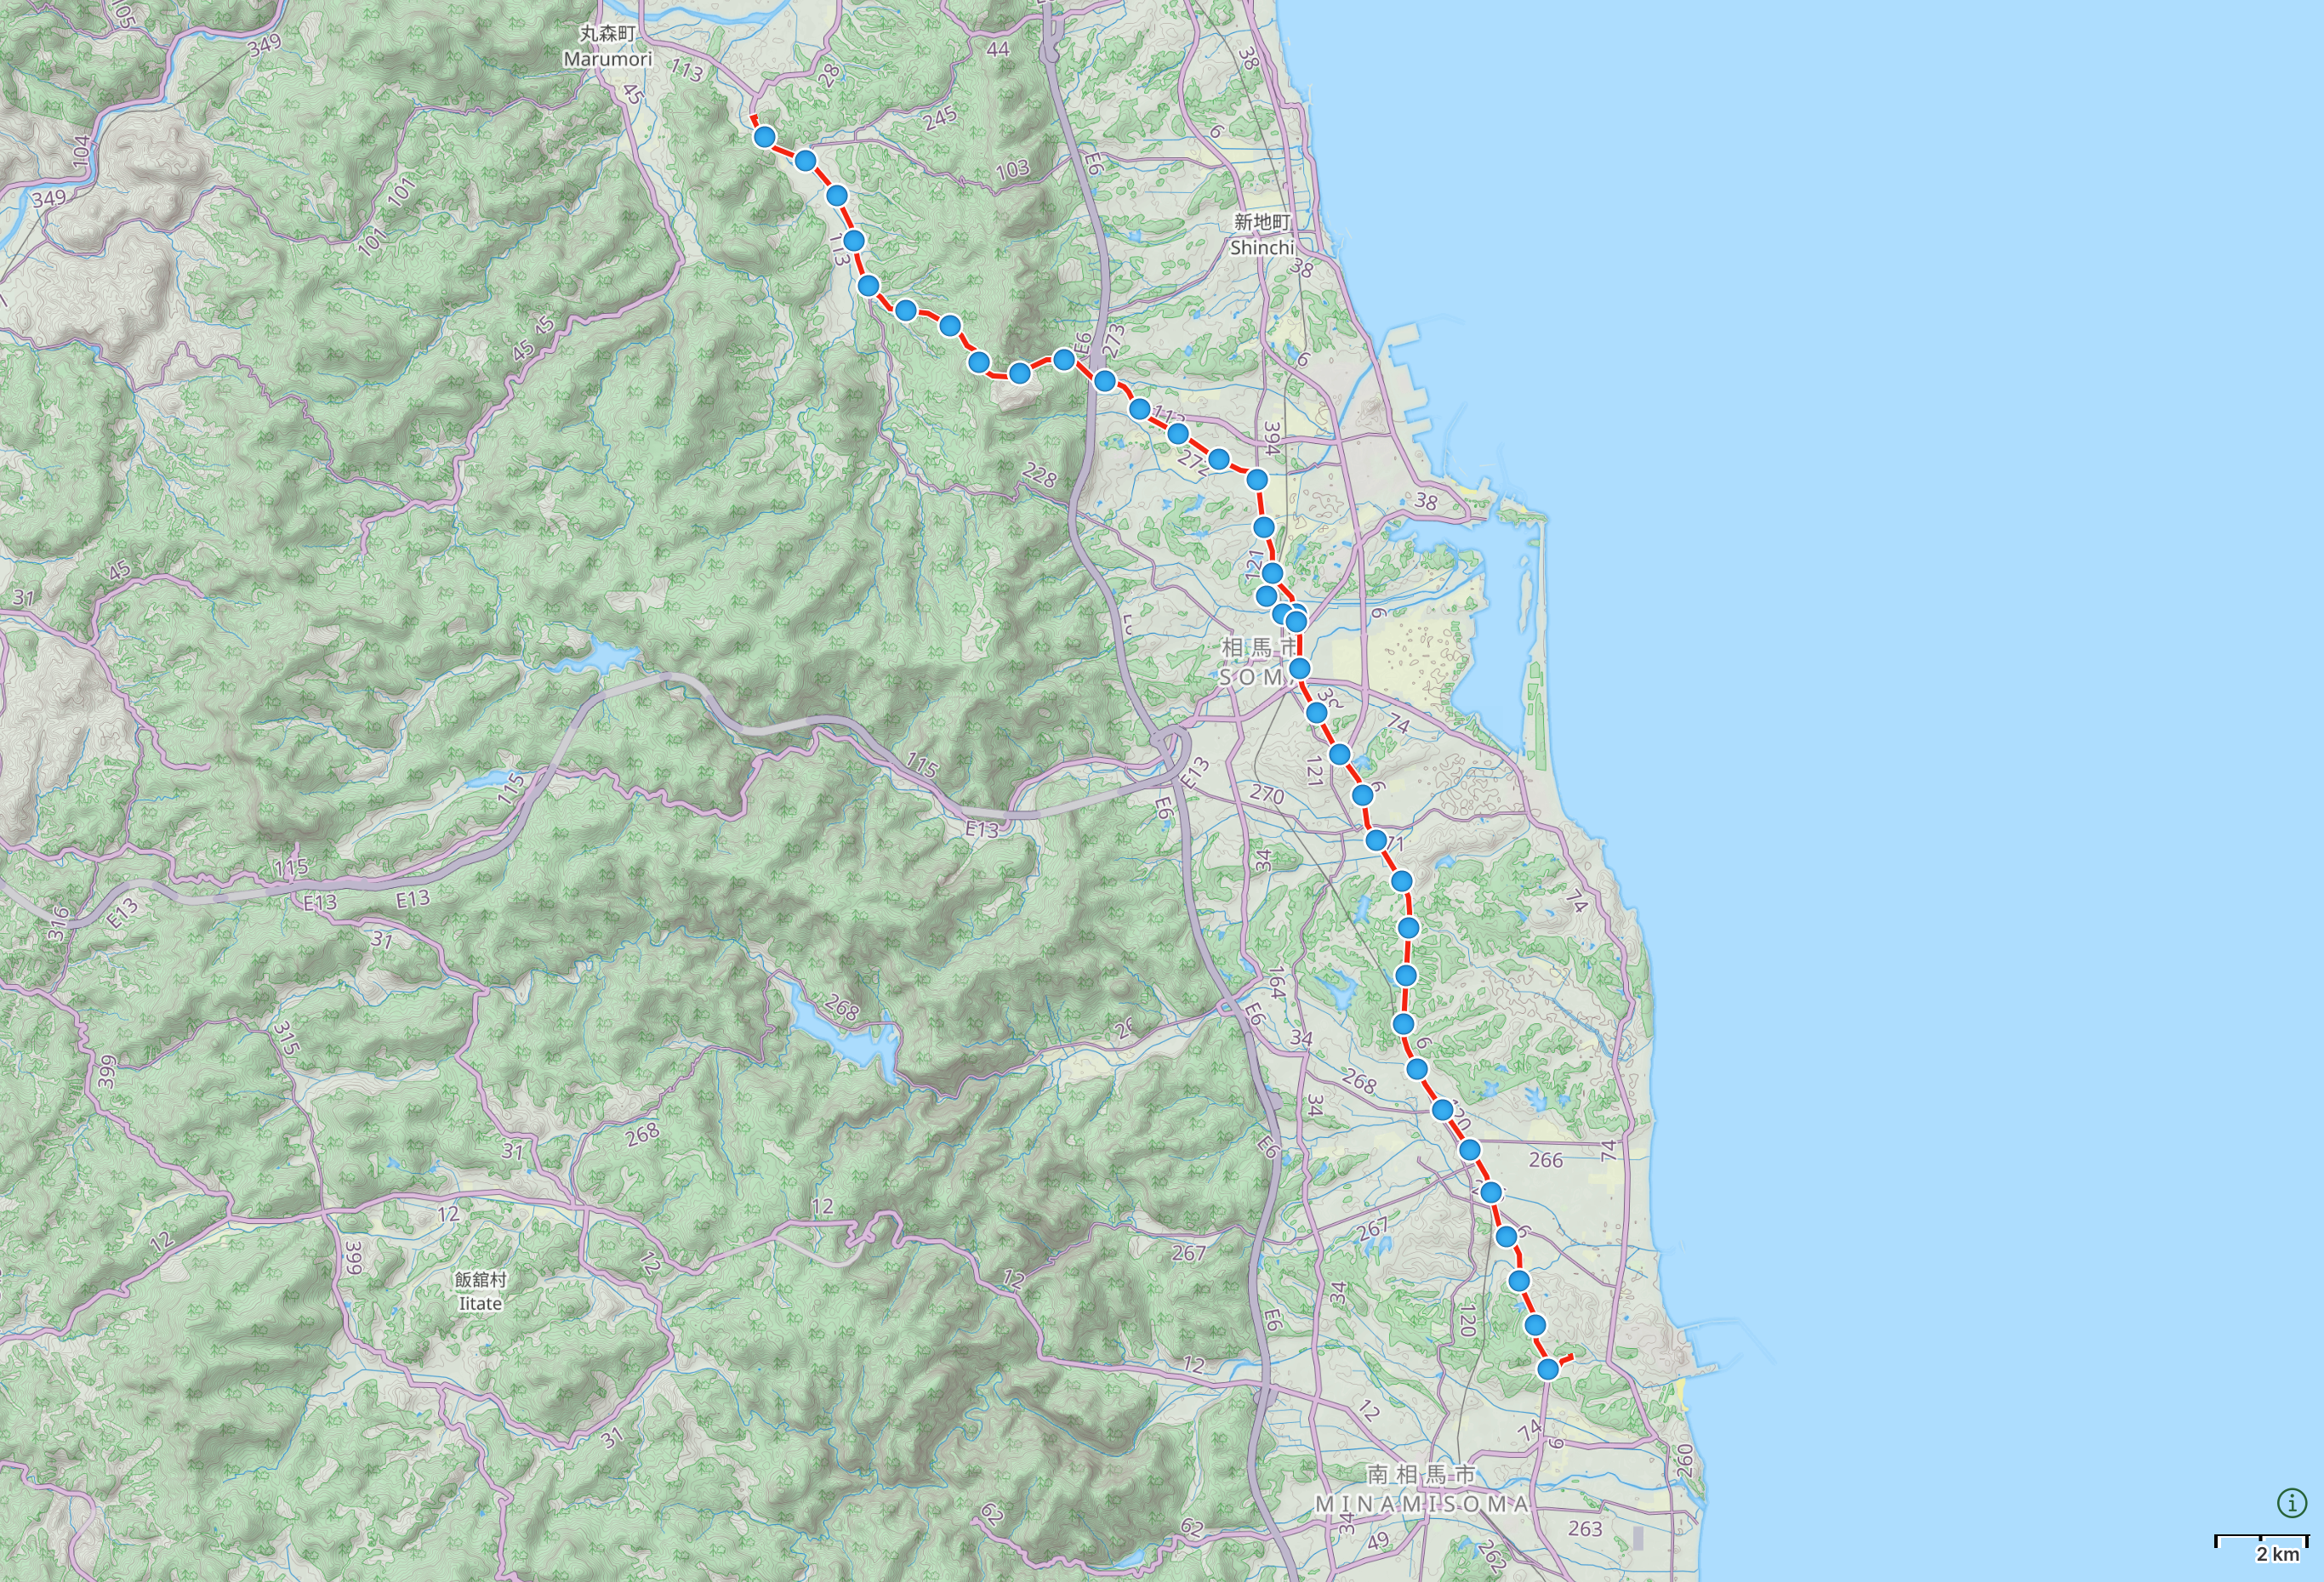 Map of Tōhoku with author’s route from Minamisōma, Fukushima to Marumori, Miyagi highlighted.